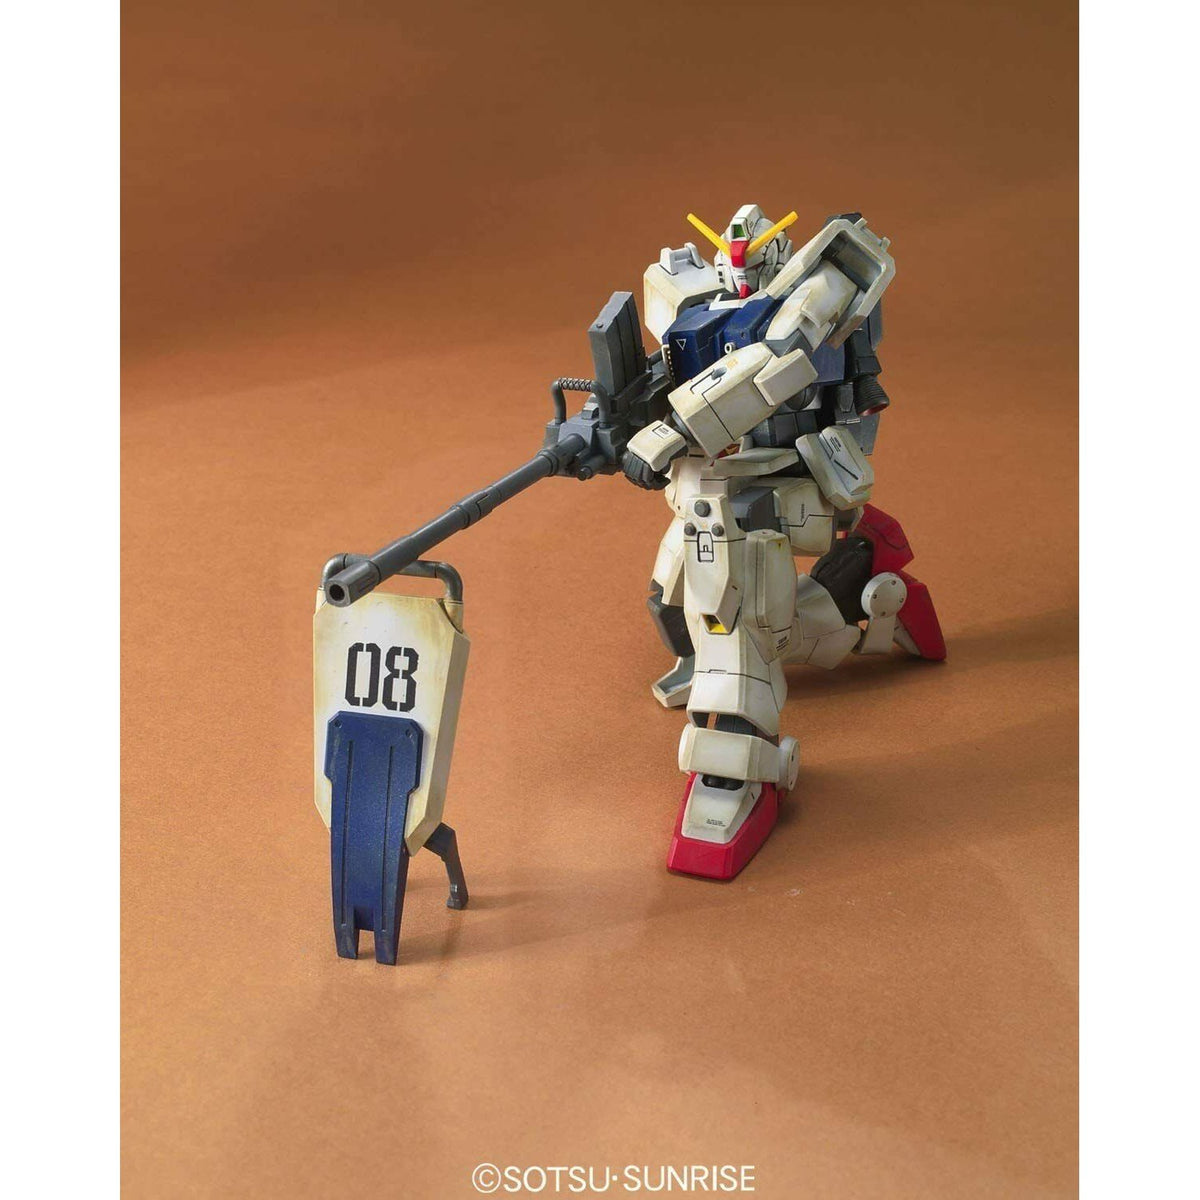 Gunpla HG 1/144 RX-79[G] Gundam The Ground War Set-Bandai-Ace Cards &amp; Collectibles